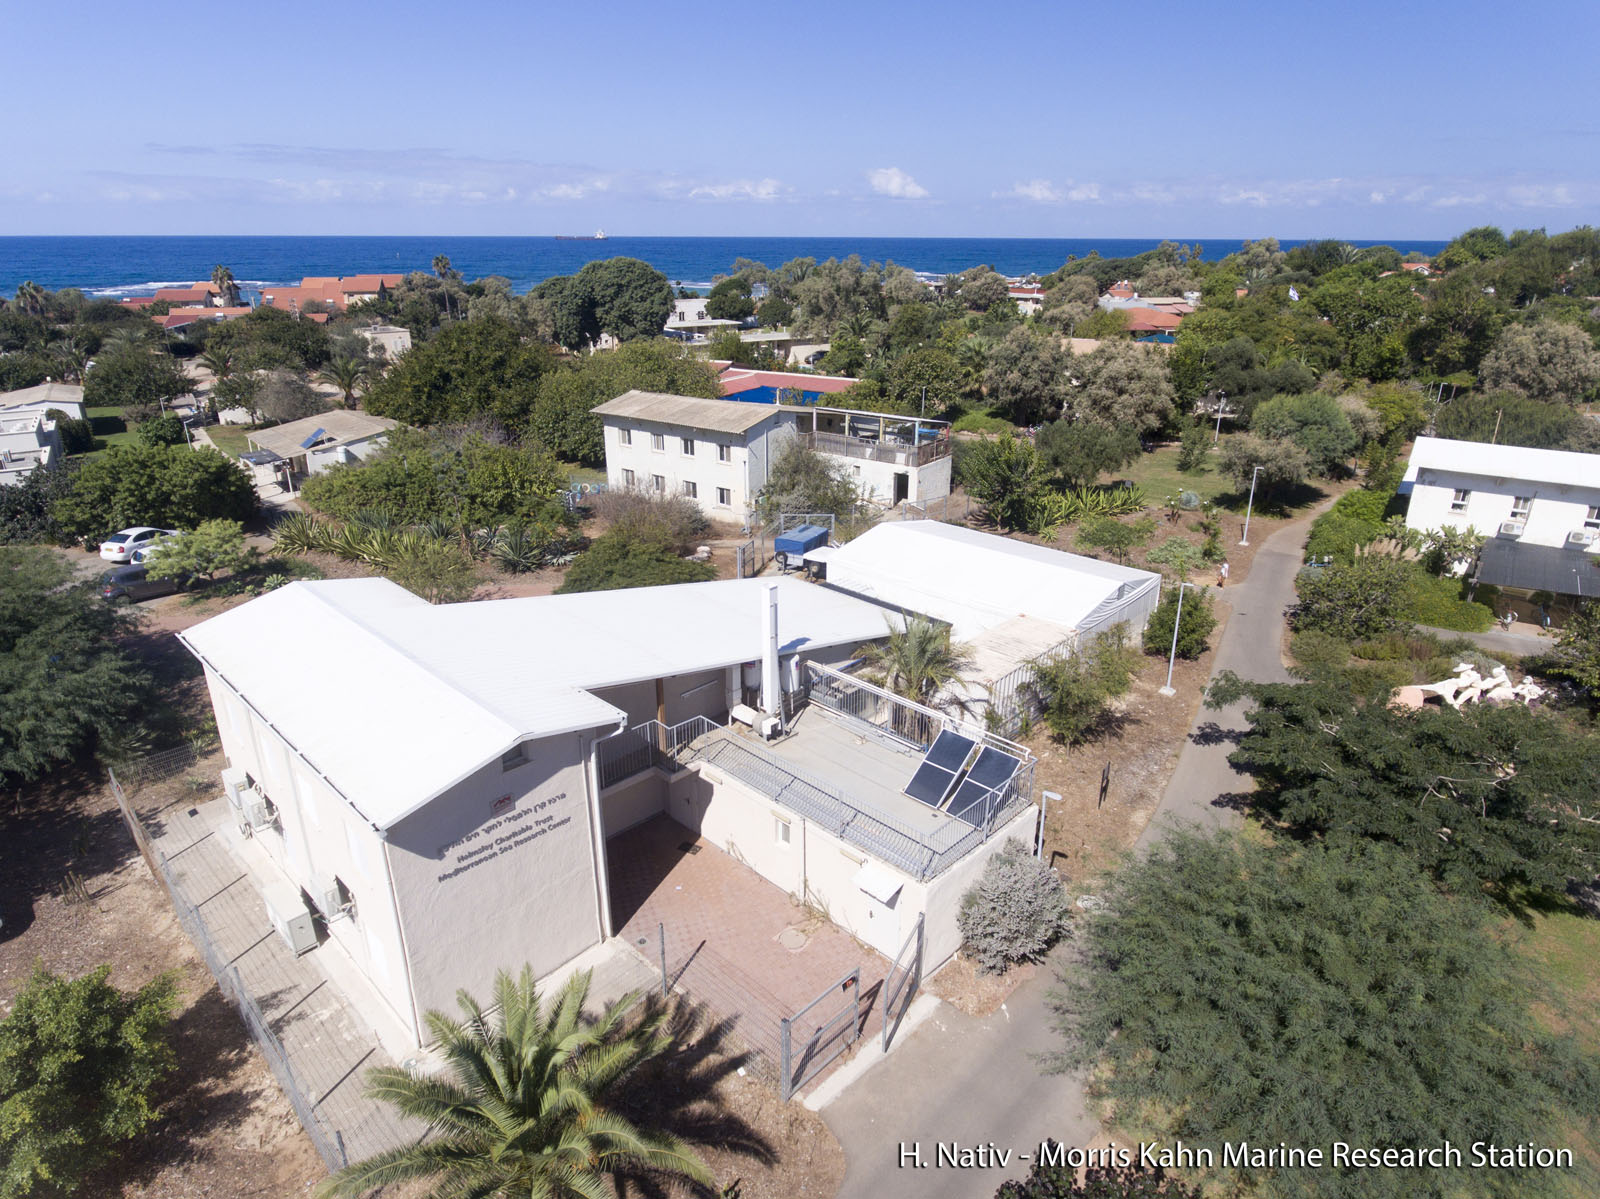 Morris Kahn Marine Research Station located at Kibbutz Sdot-Yam